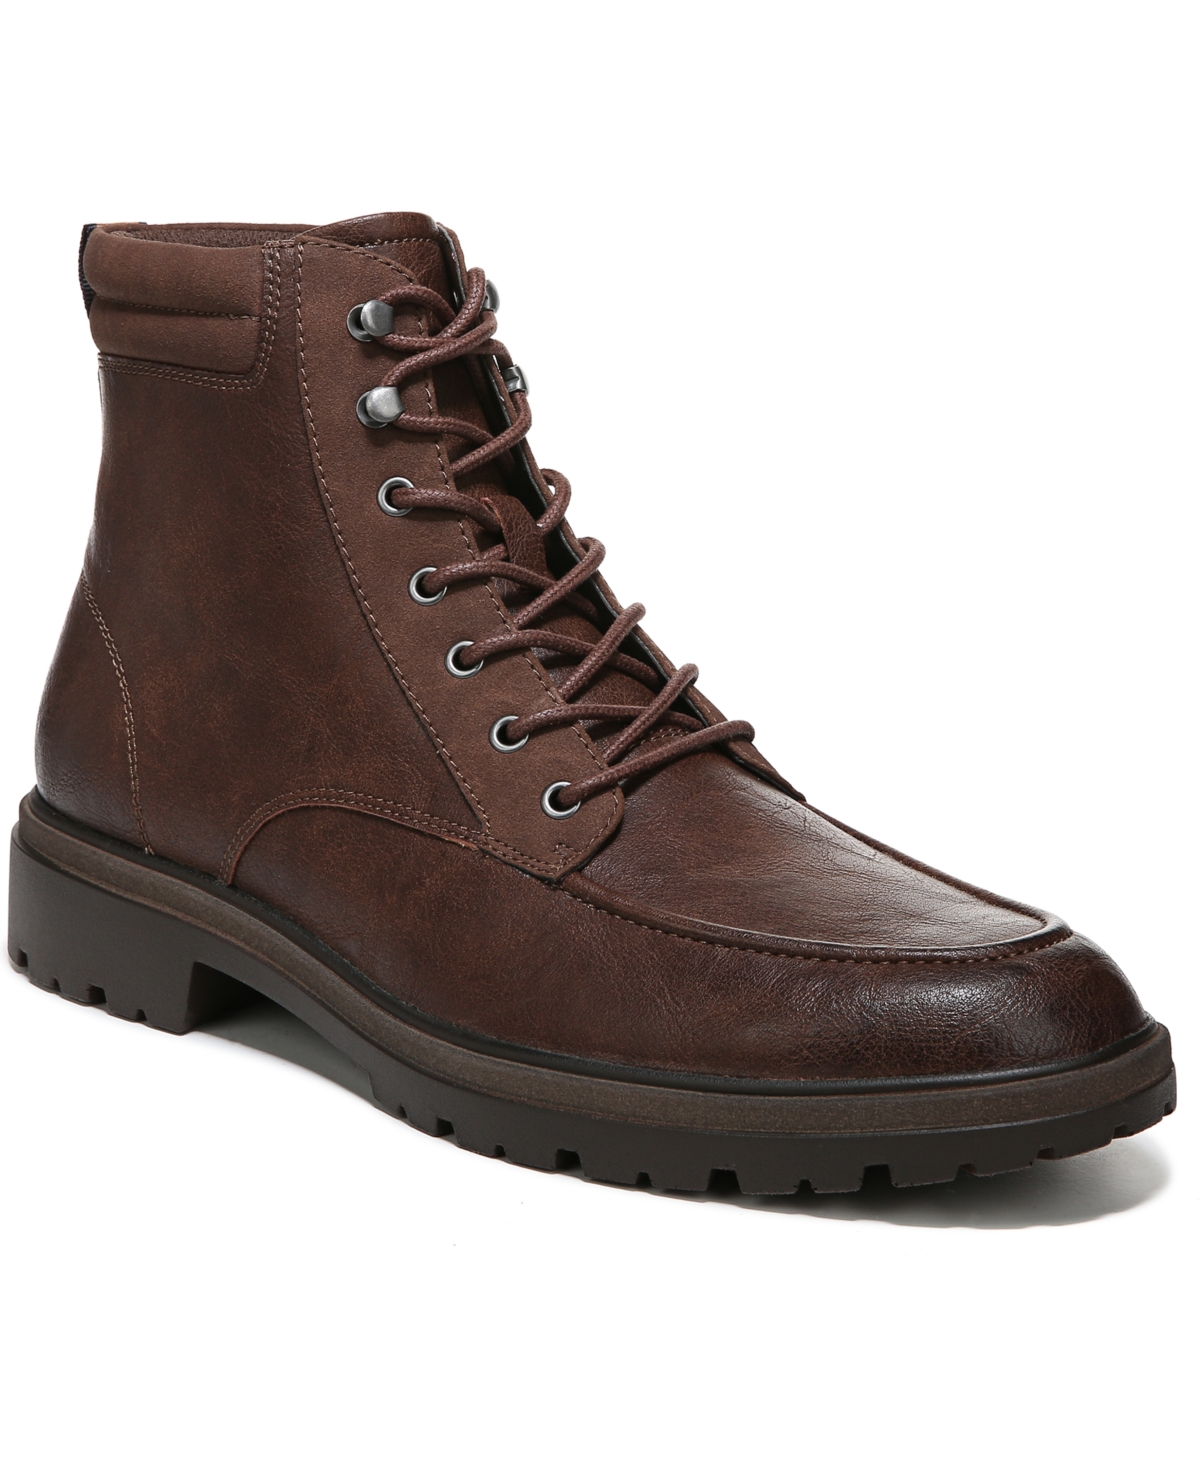 Men's Grayton Mid Shaft Boots - Dark Brown Synthetic